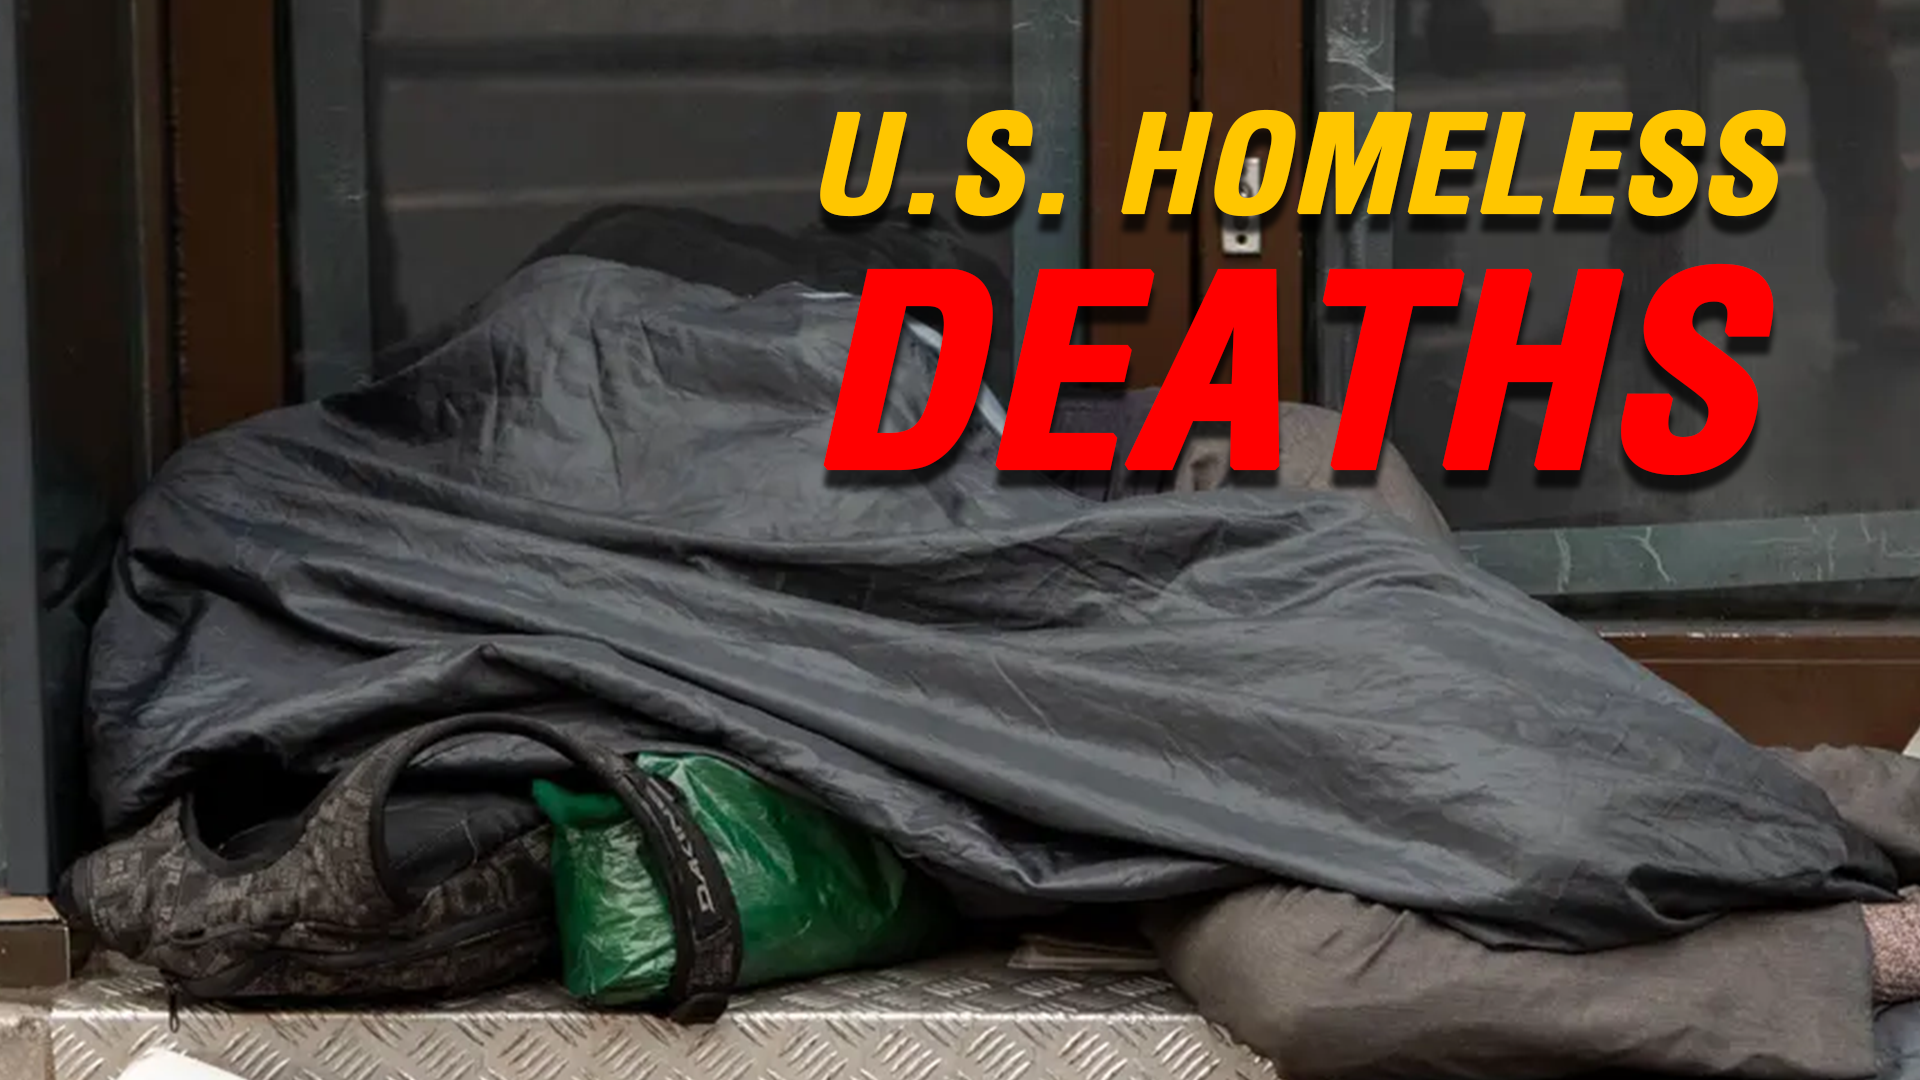 US homeless deaths skyrocketing